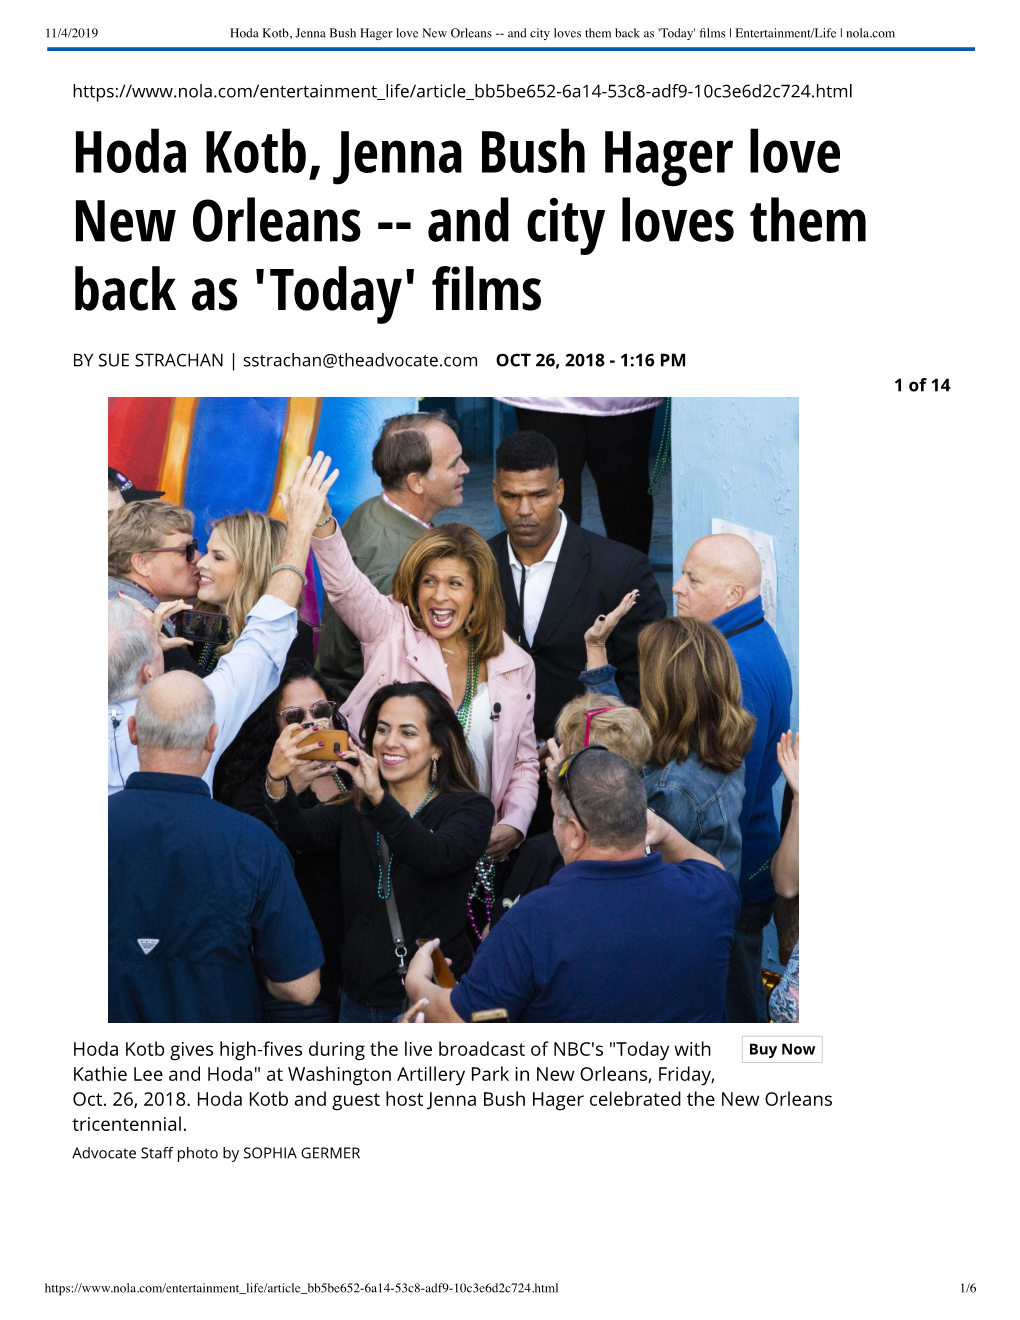 Hoda Kotb, Jenna Bush Hager Love New Orleans -- and City Loves Them Back As 'Today' ﬁlms | Entertainment/Life | Nola.Com